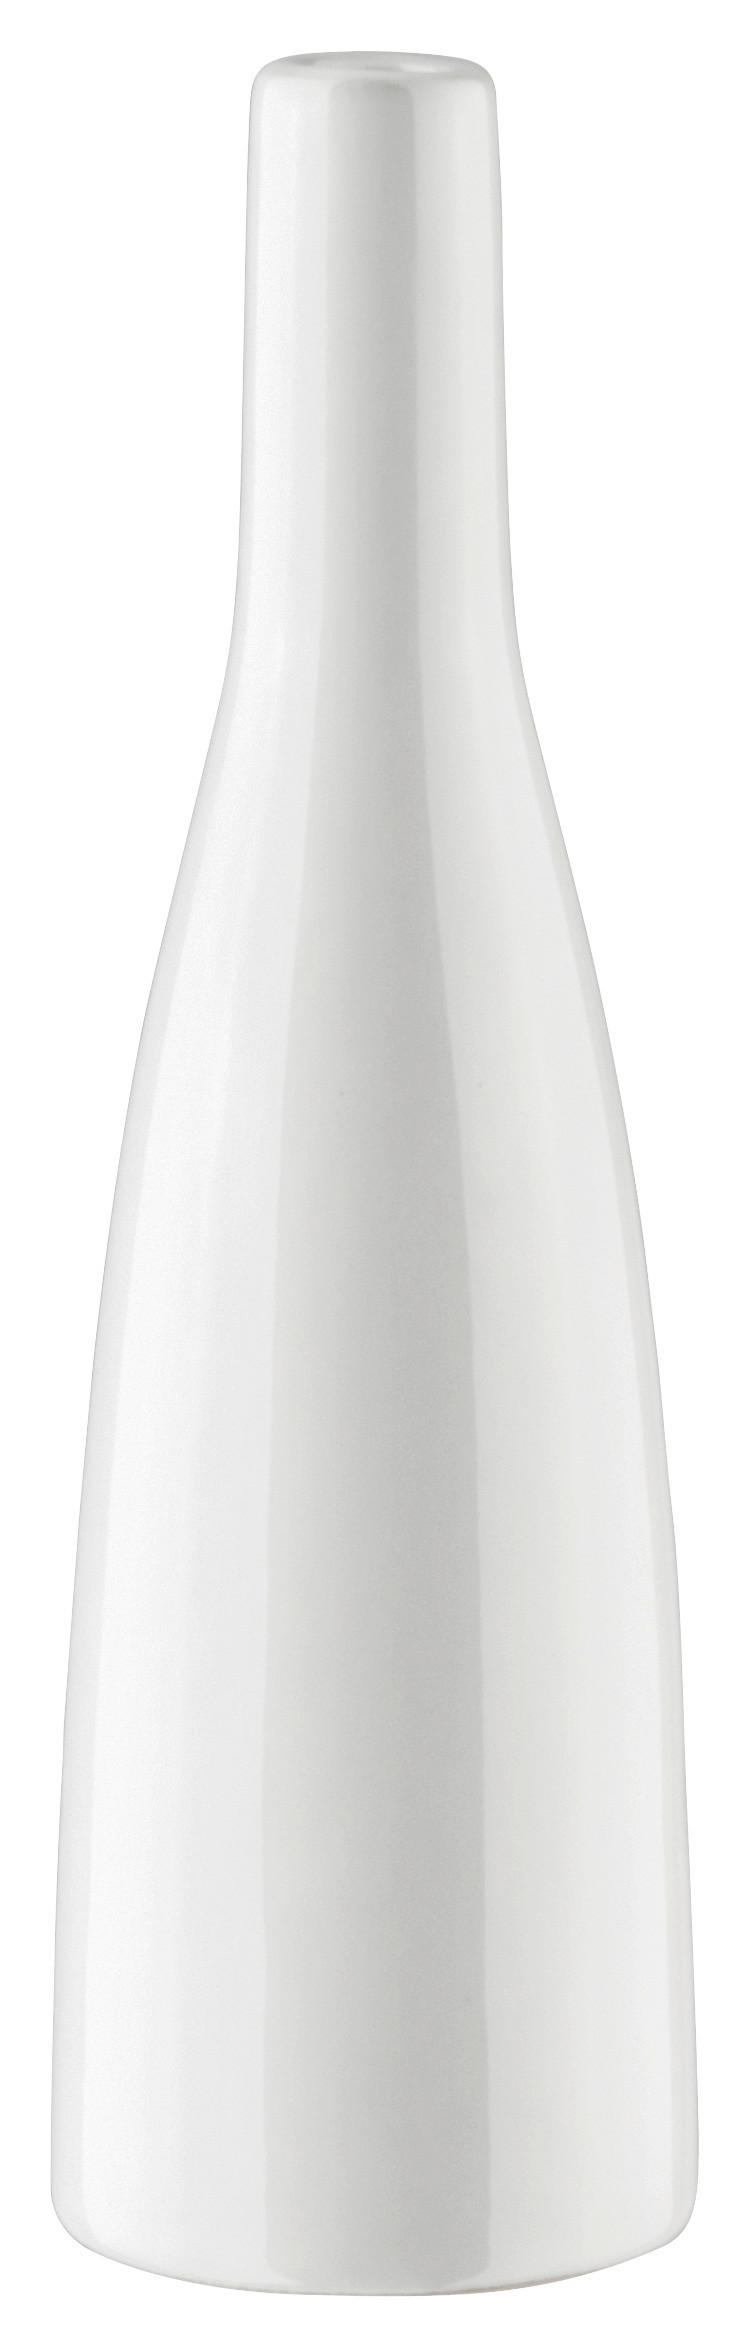 Vază Plancio - alb, Modern, ceramică (5,5/20.5cm) - Modern Living